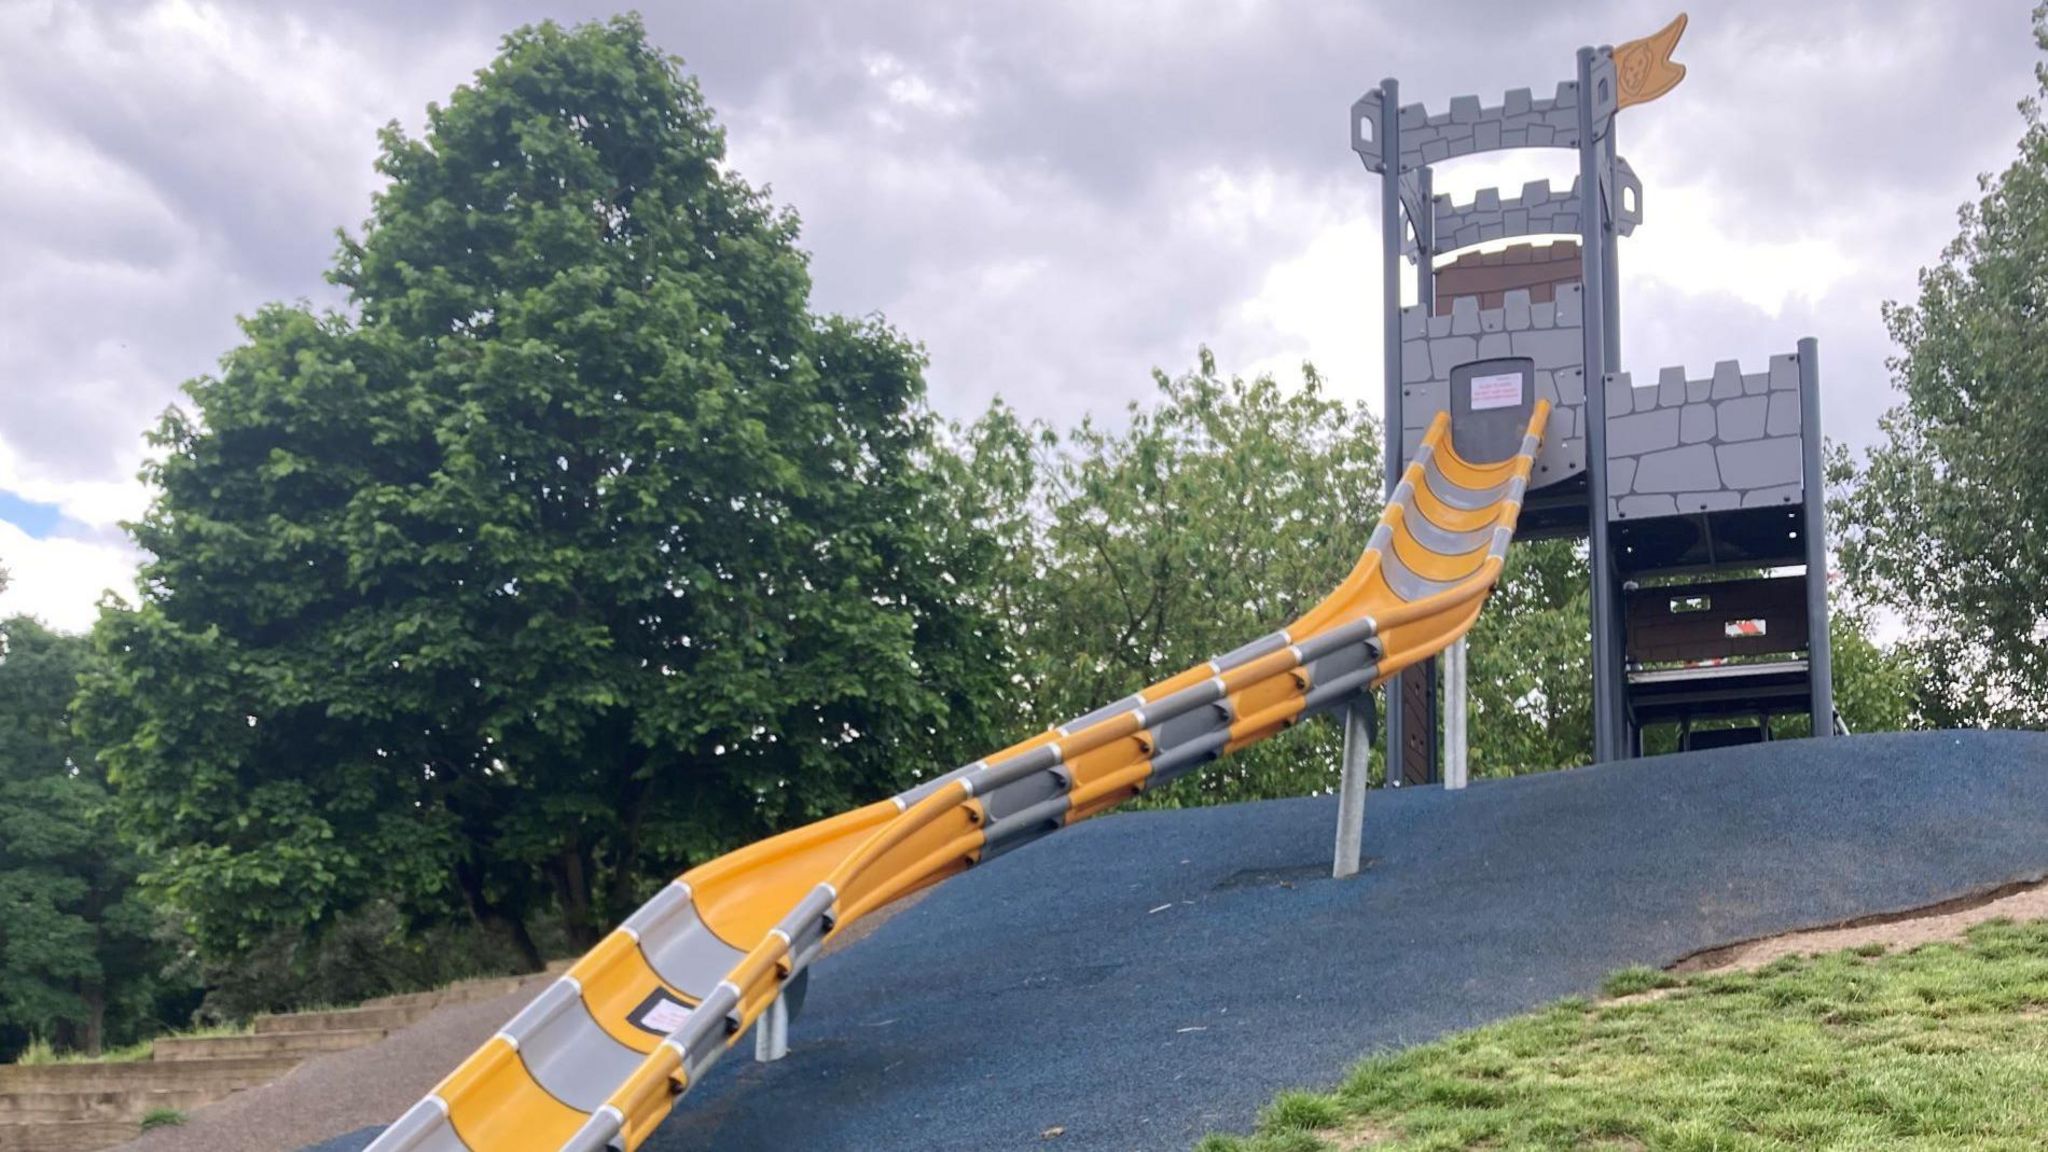 The slide at Pontefract Park